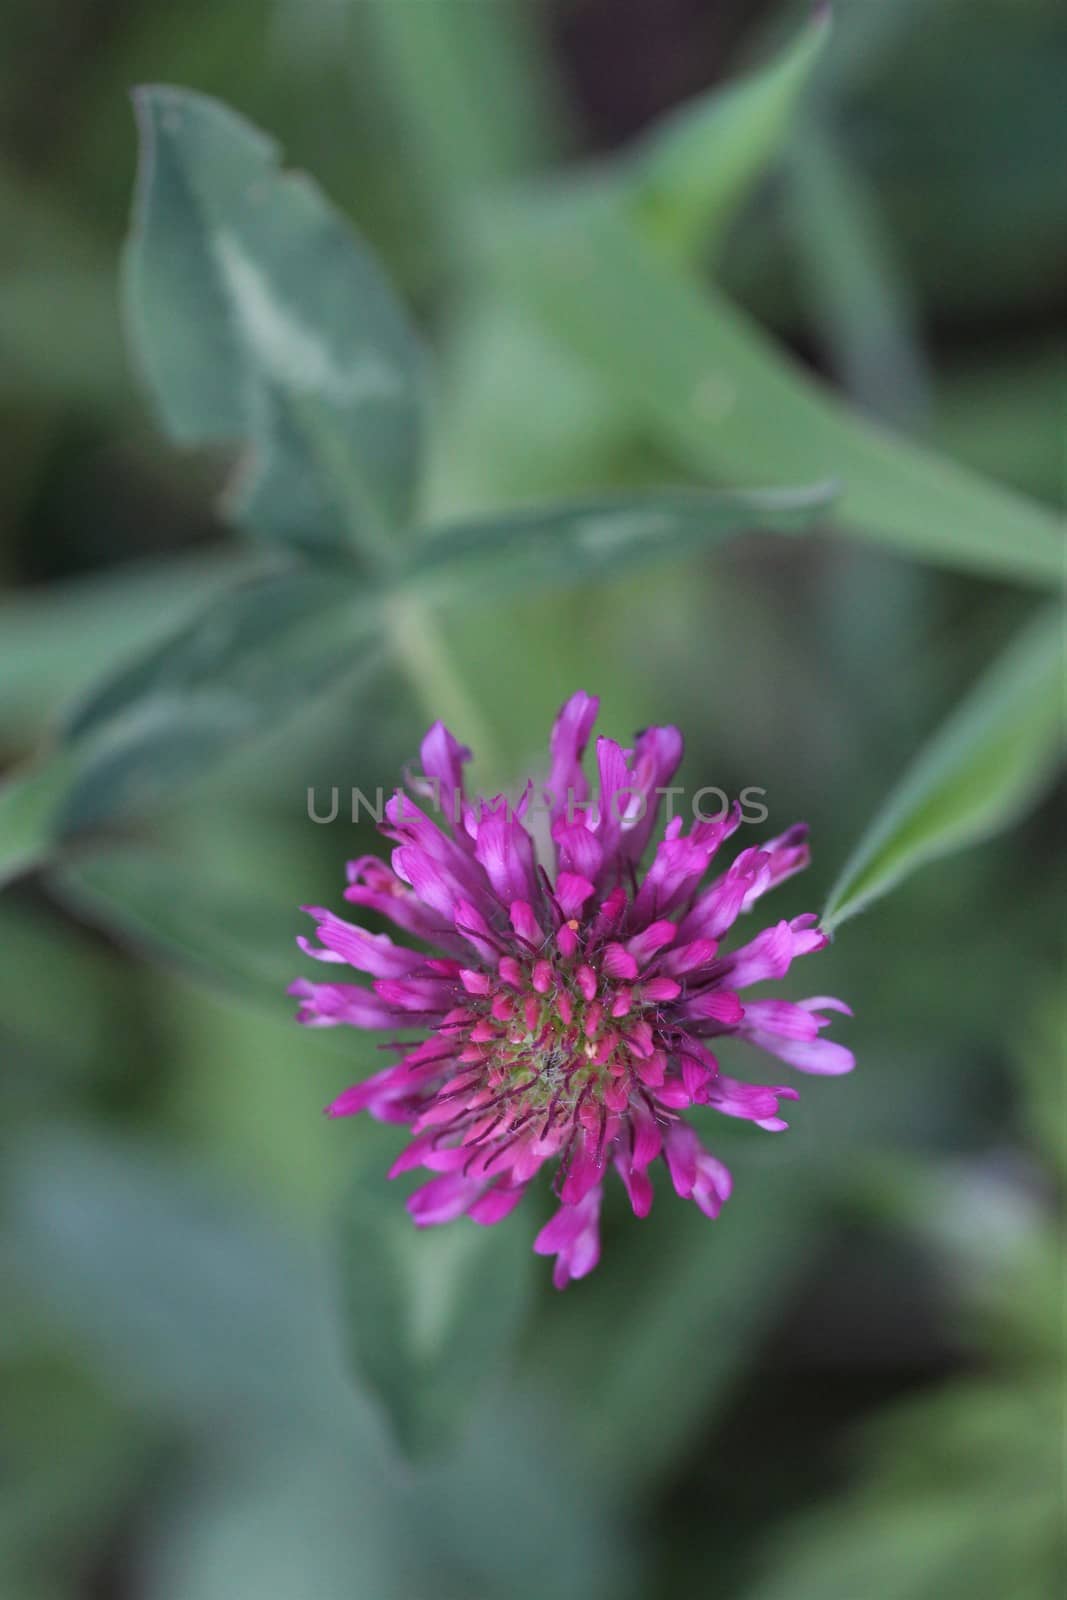 Trifolium pratense or red clover as close up